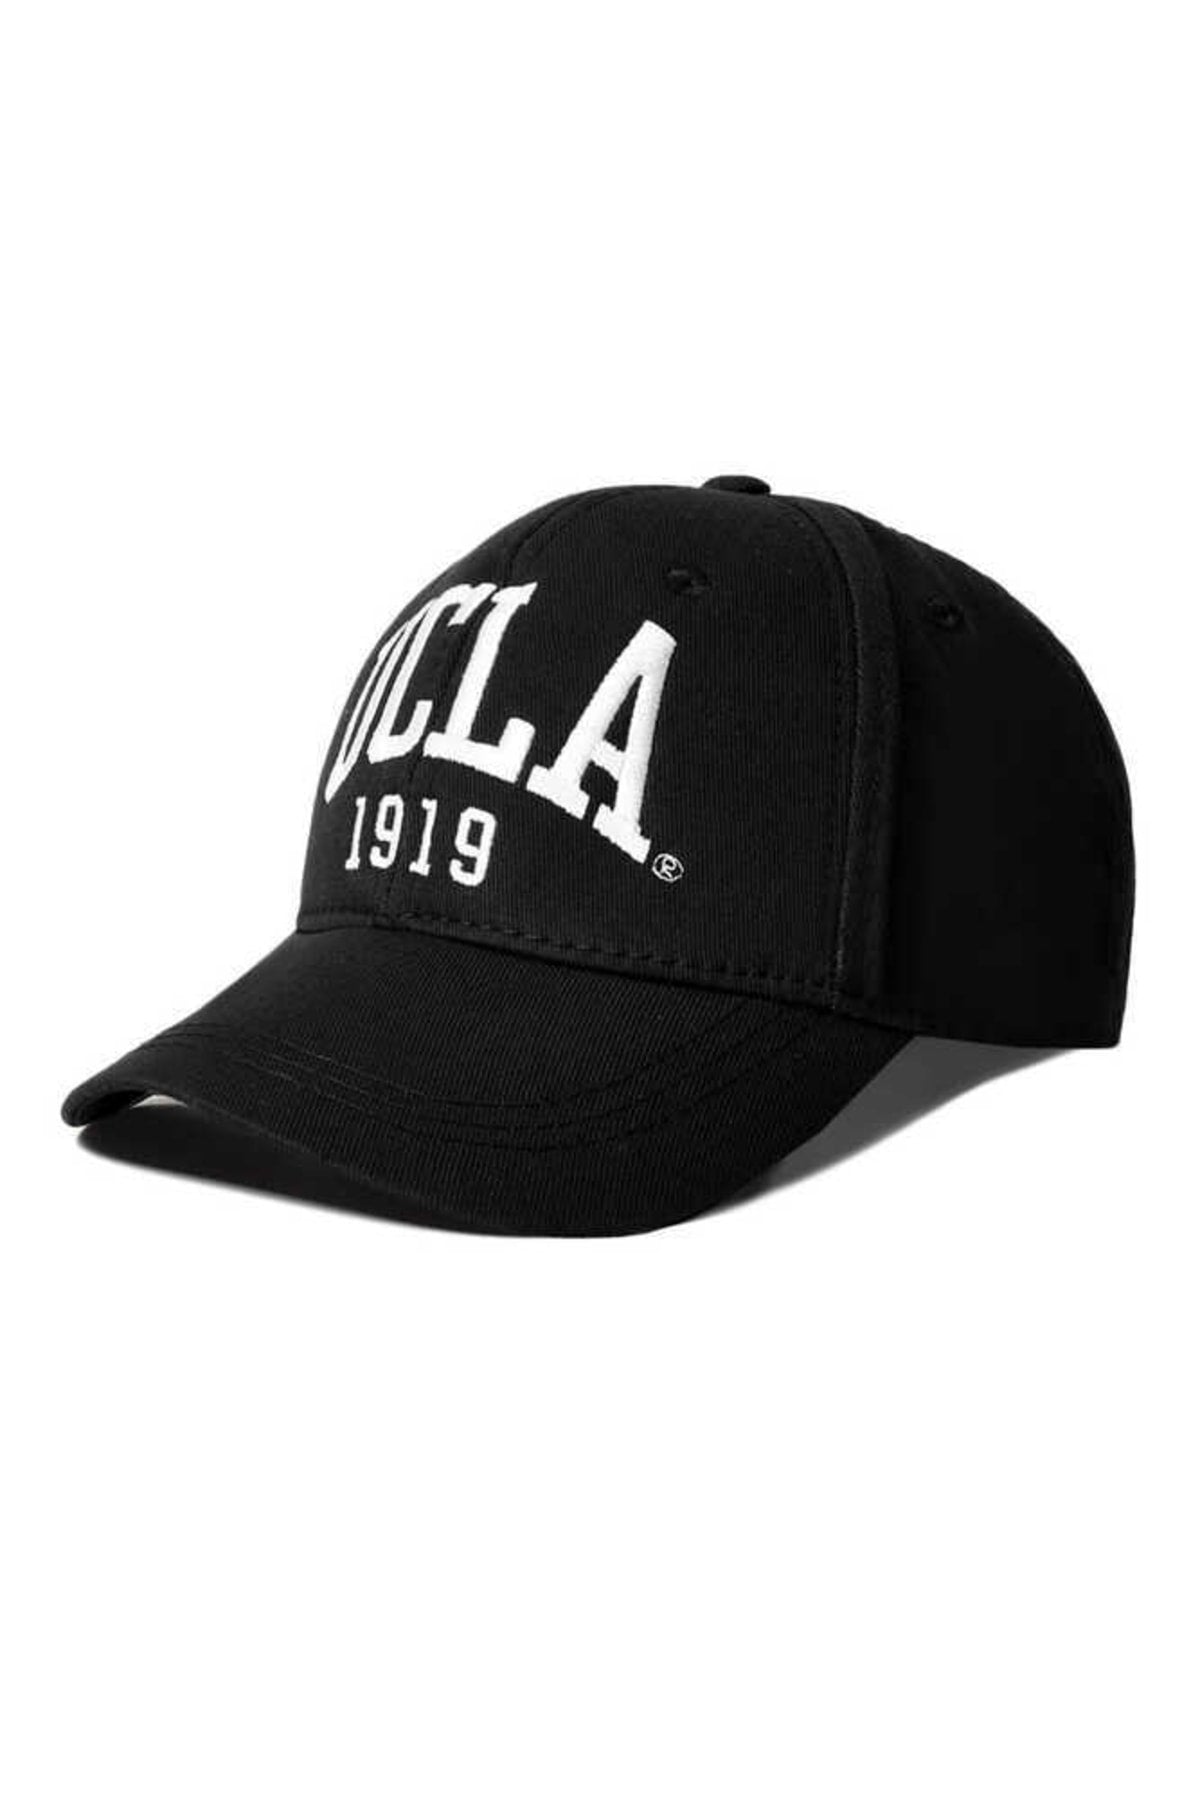 Ballard Black Baseball Cap Hat